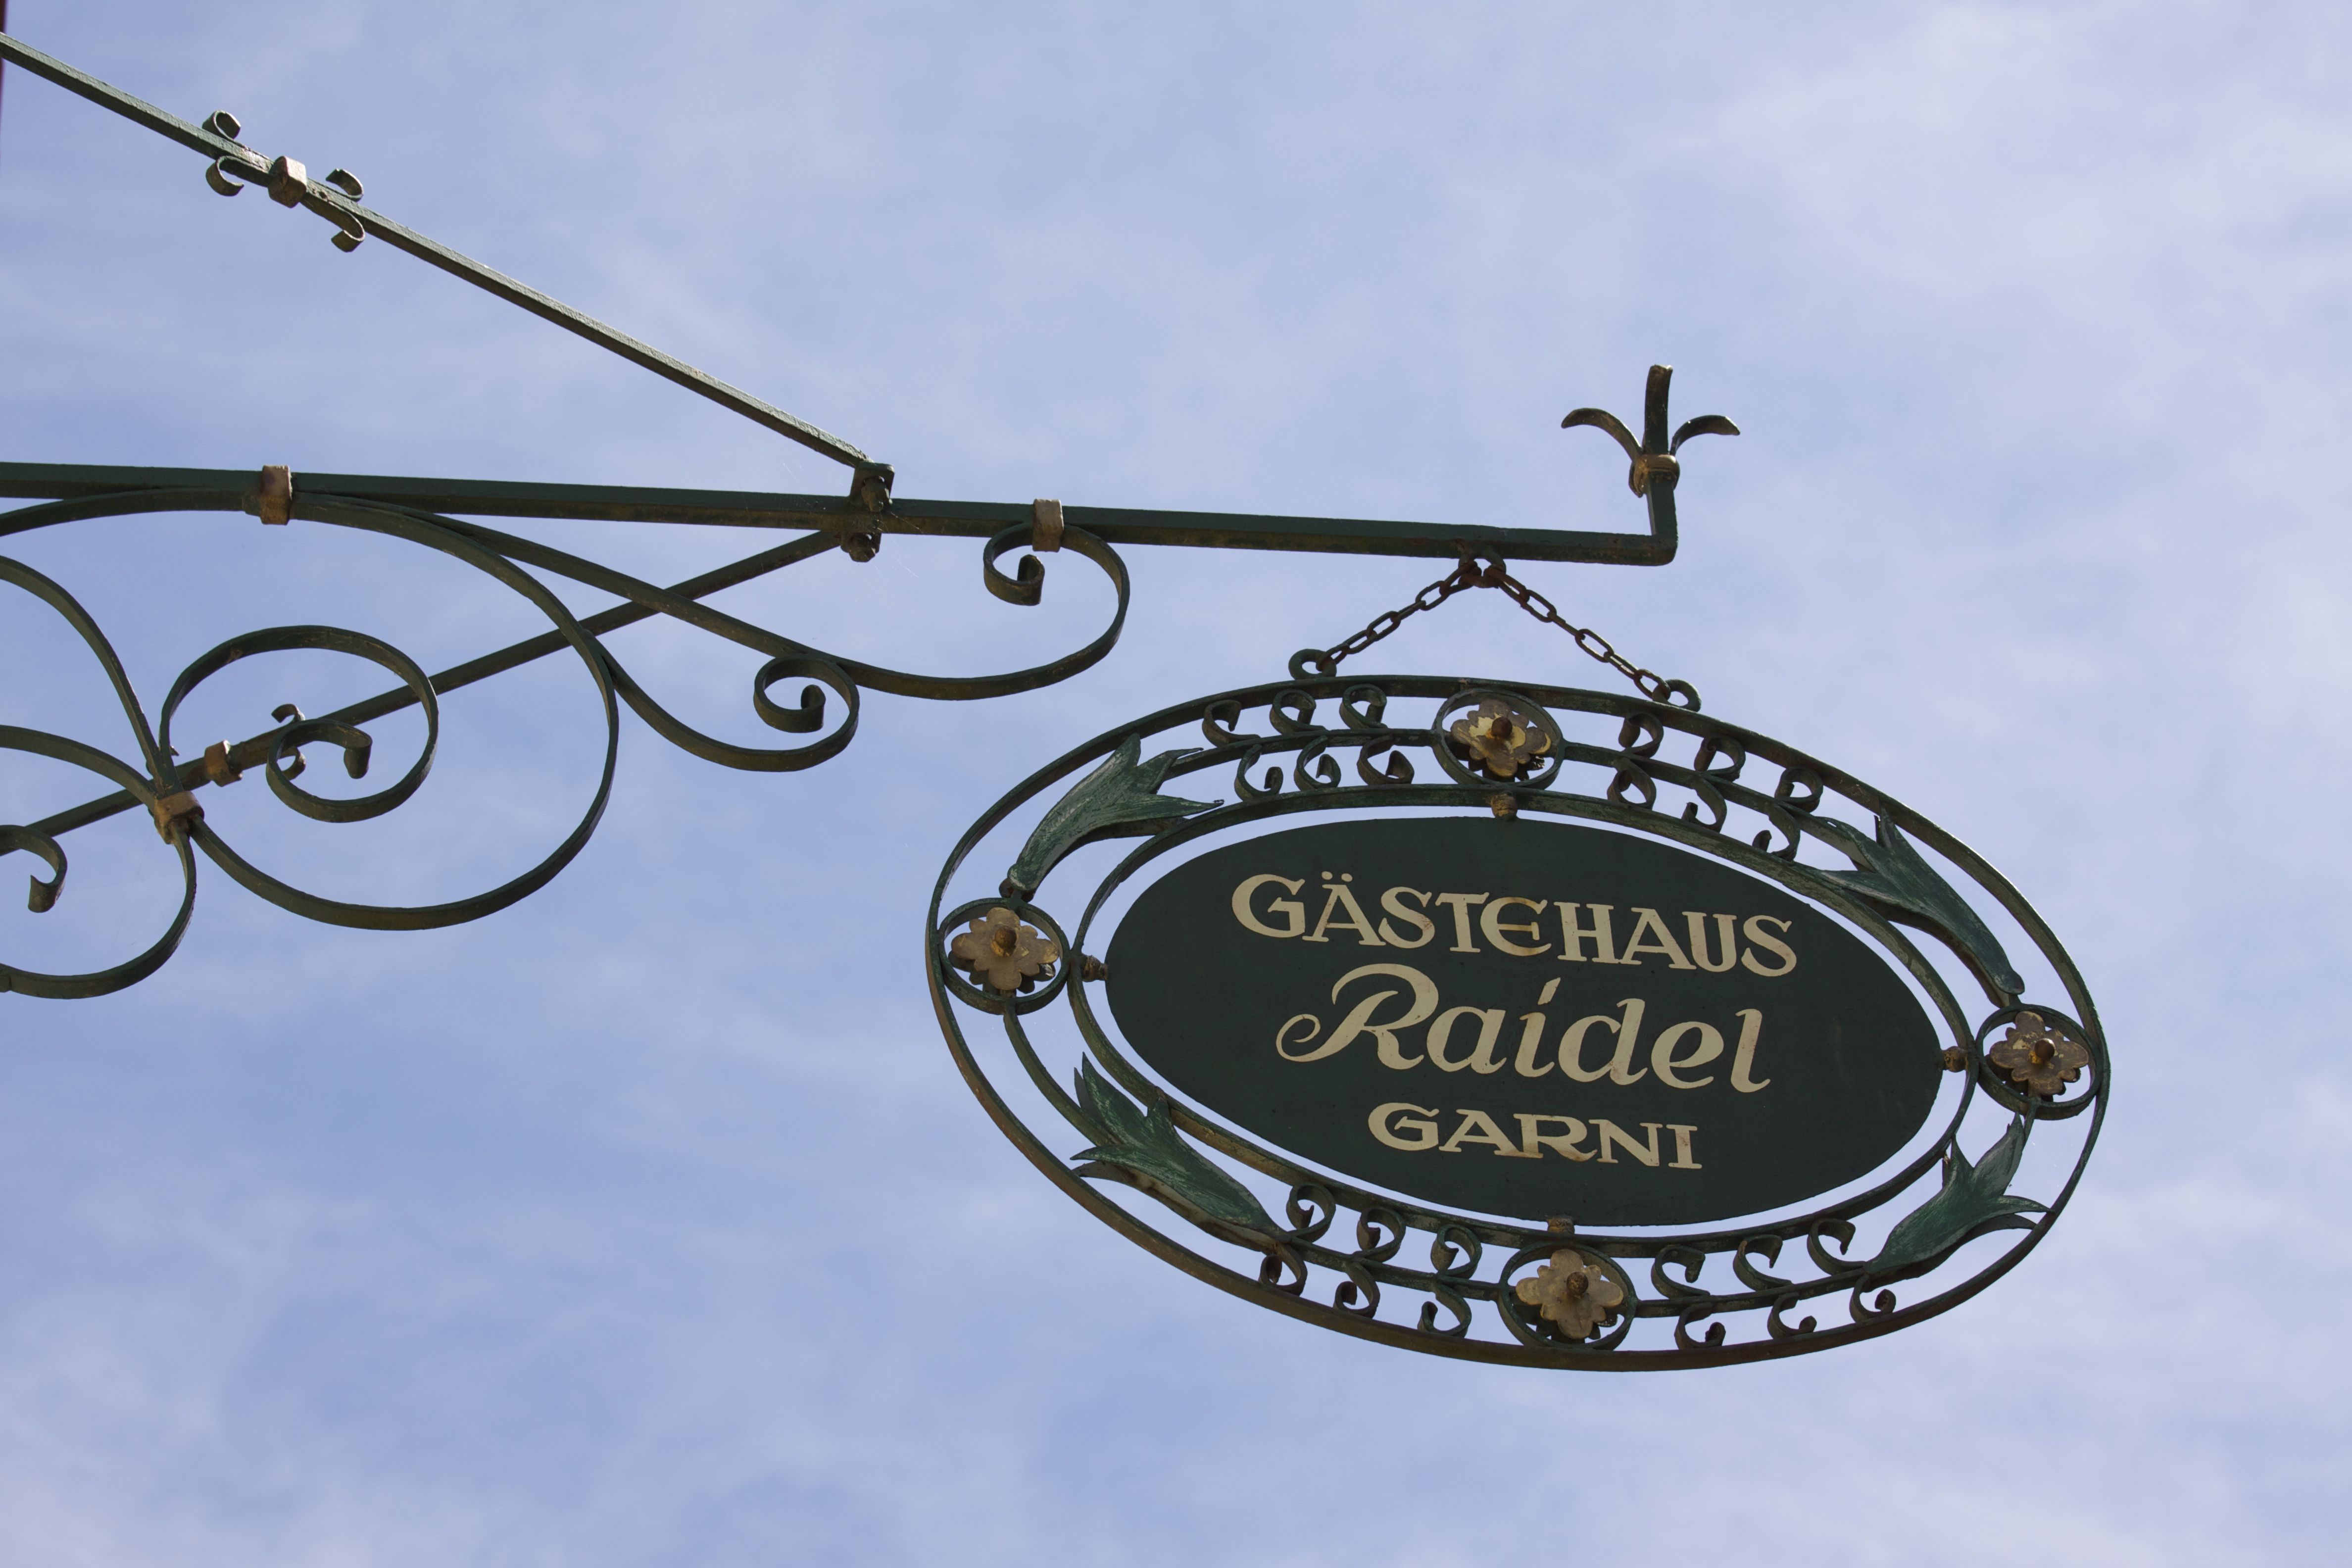 Hotel Raidel, Rothenburg ob der Tauber by Richard Ainsworth ...